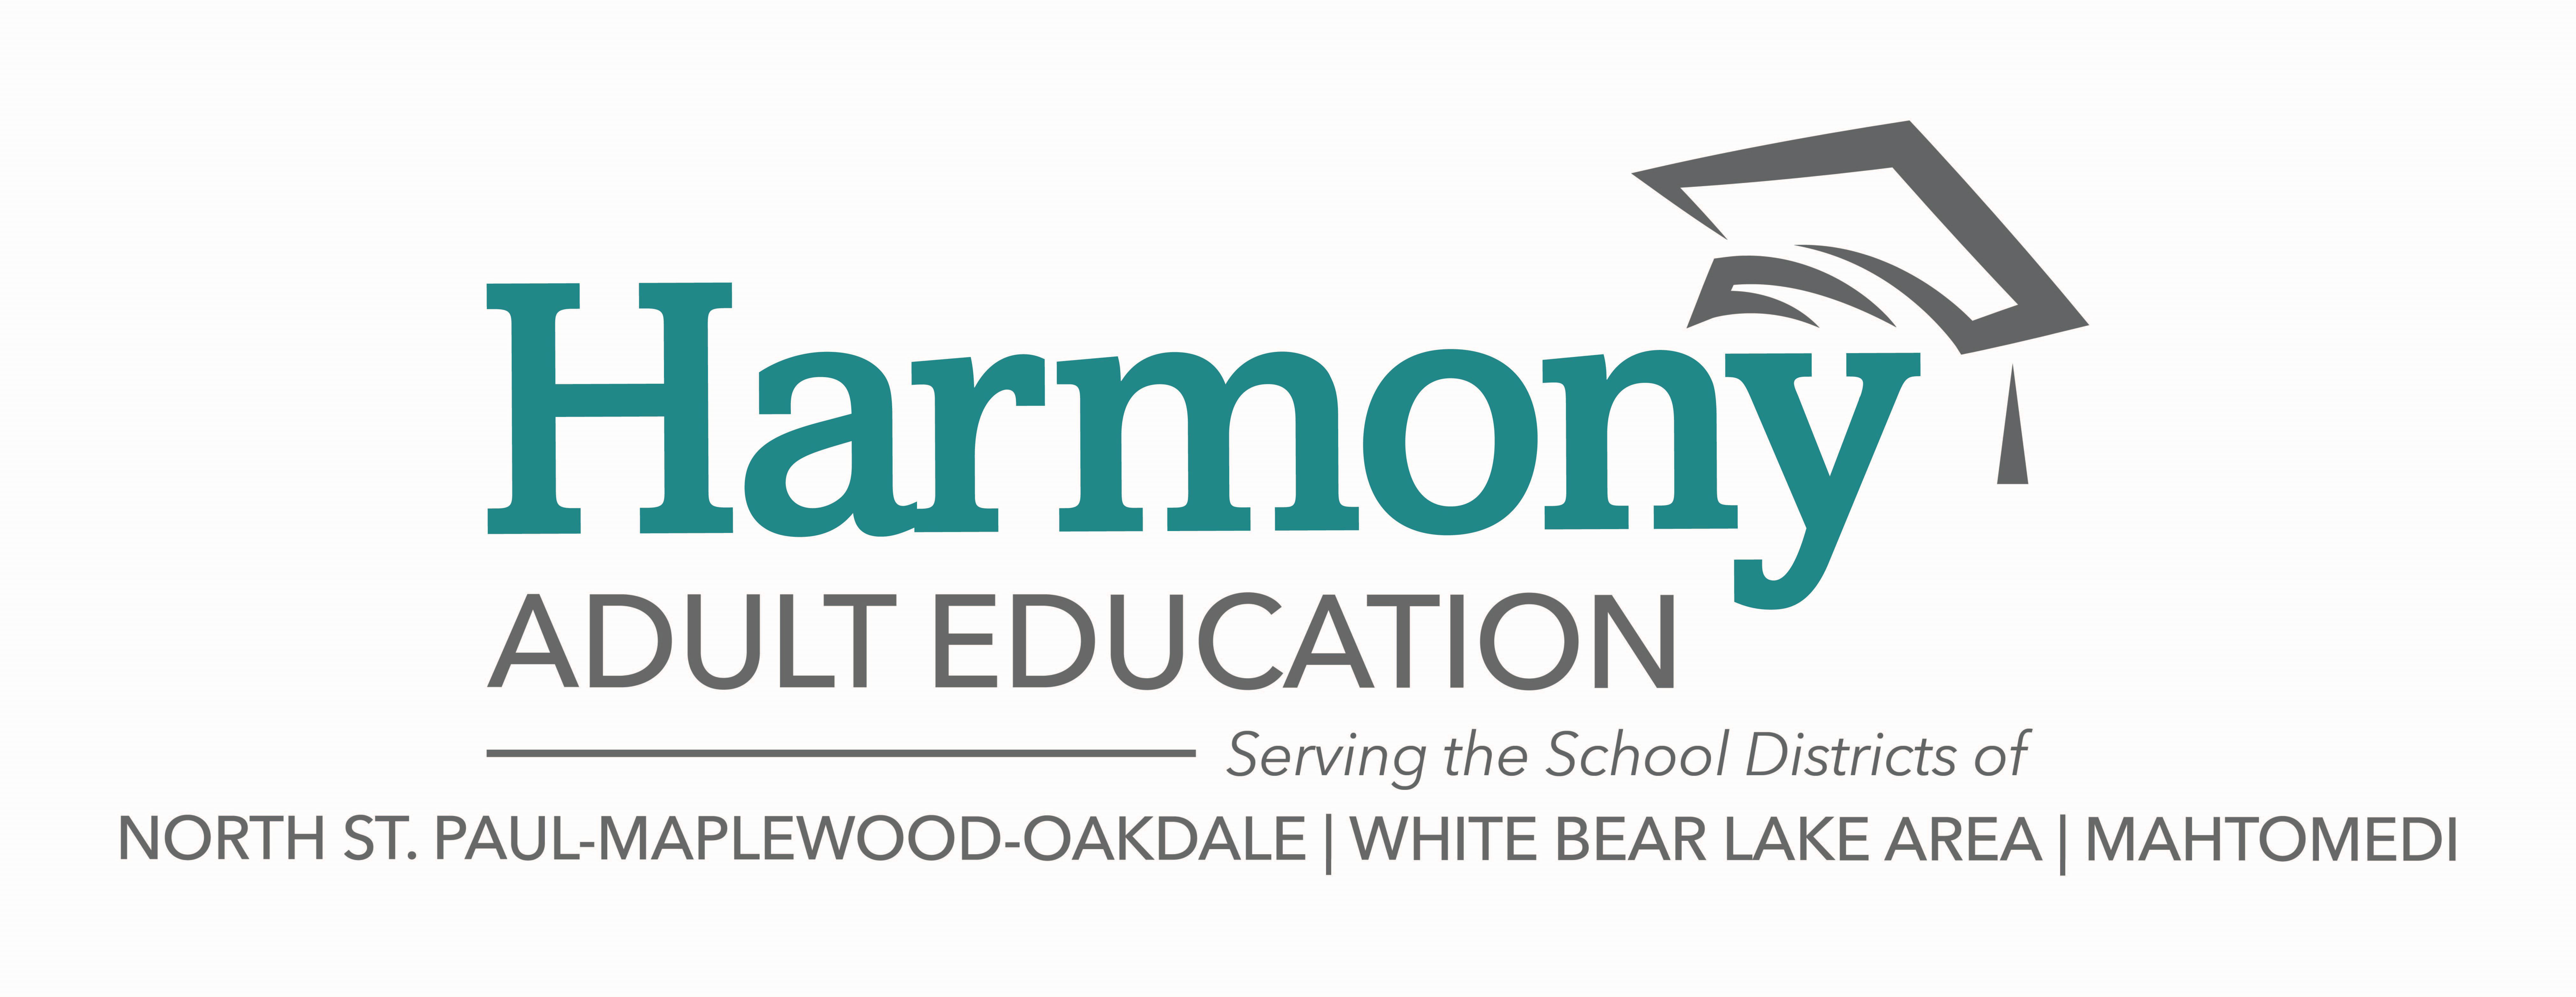 Harmony Adult Education logo